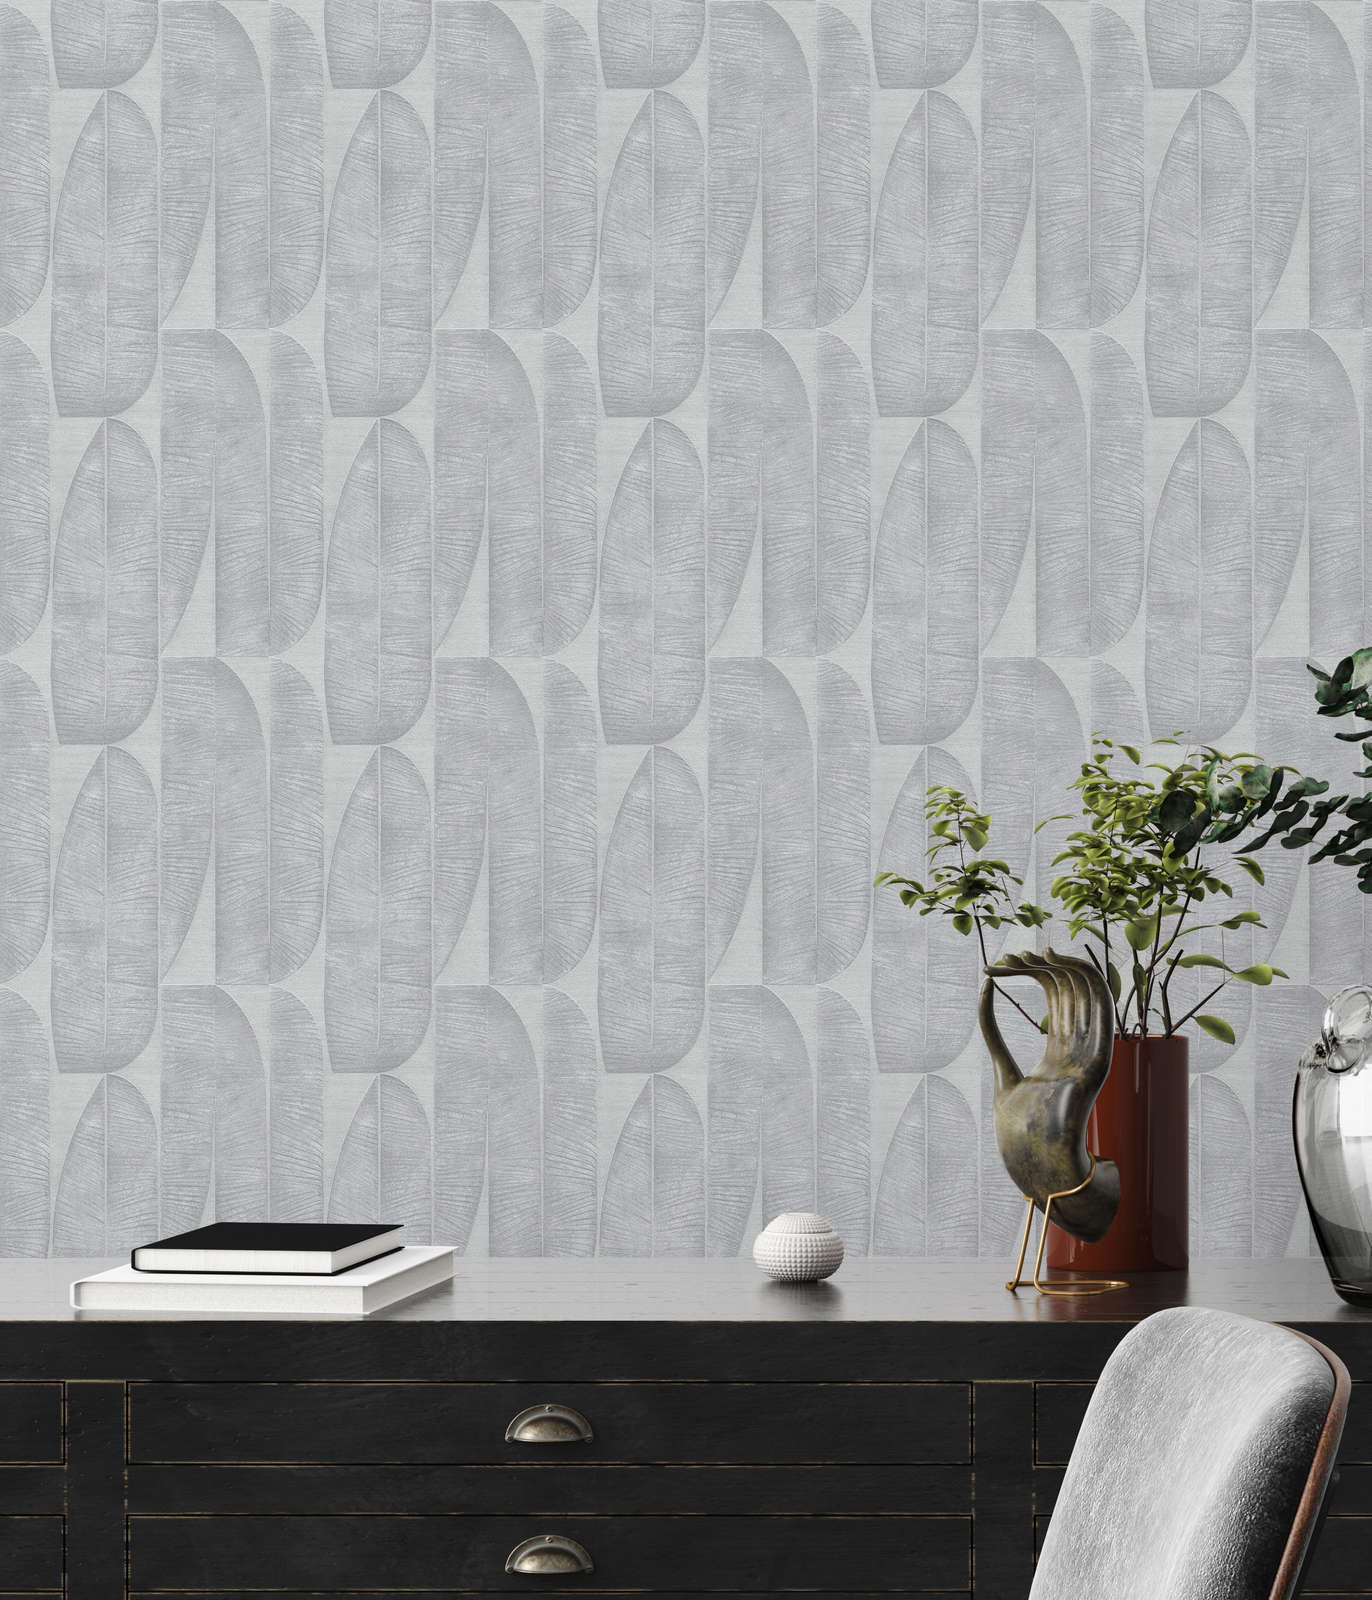             Wallpaper with geometric leaf pattern - grey
        